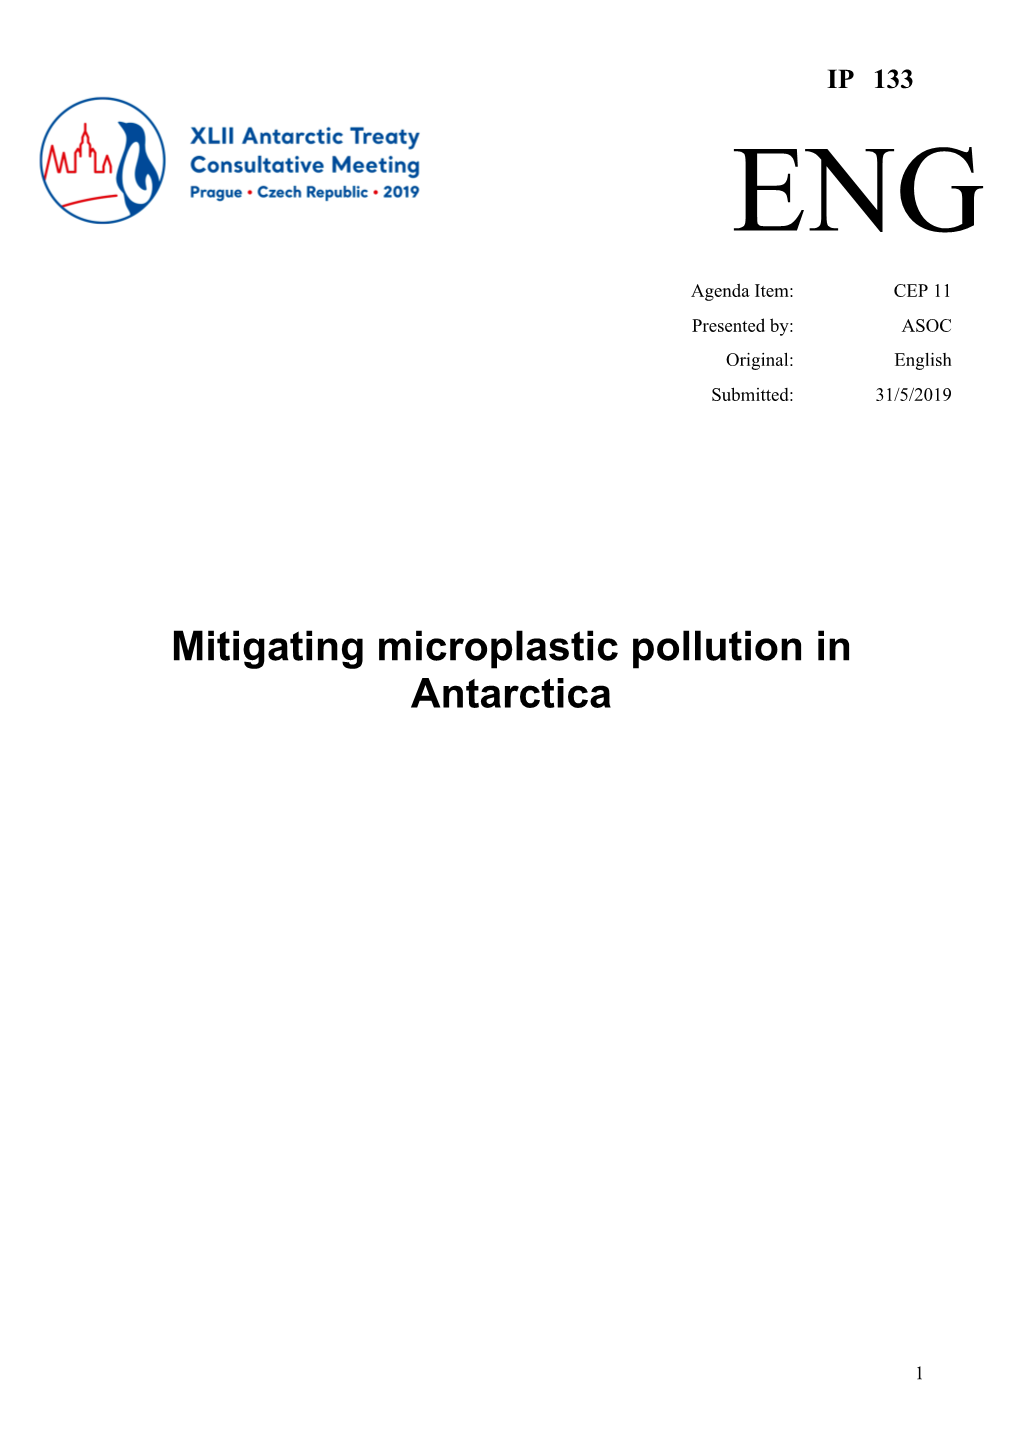 Mitigating Microplastic Pollution in Antarctica